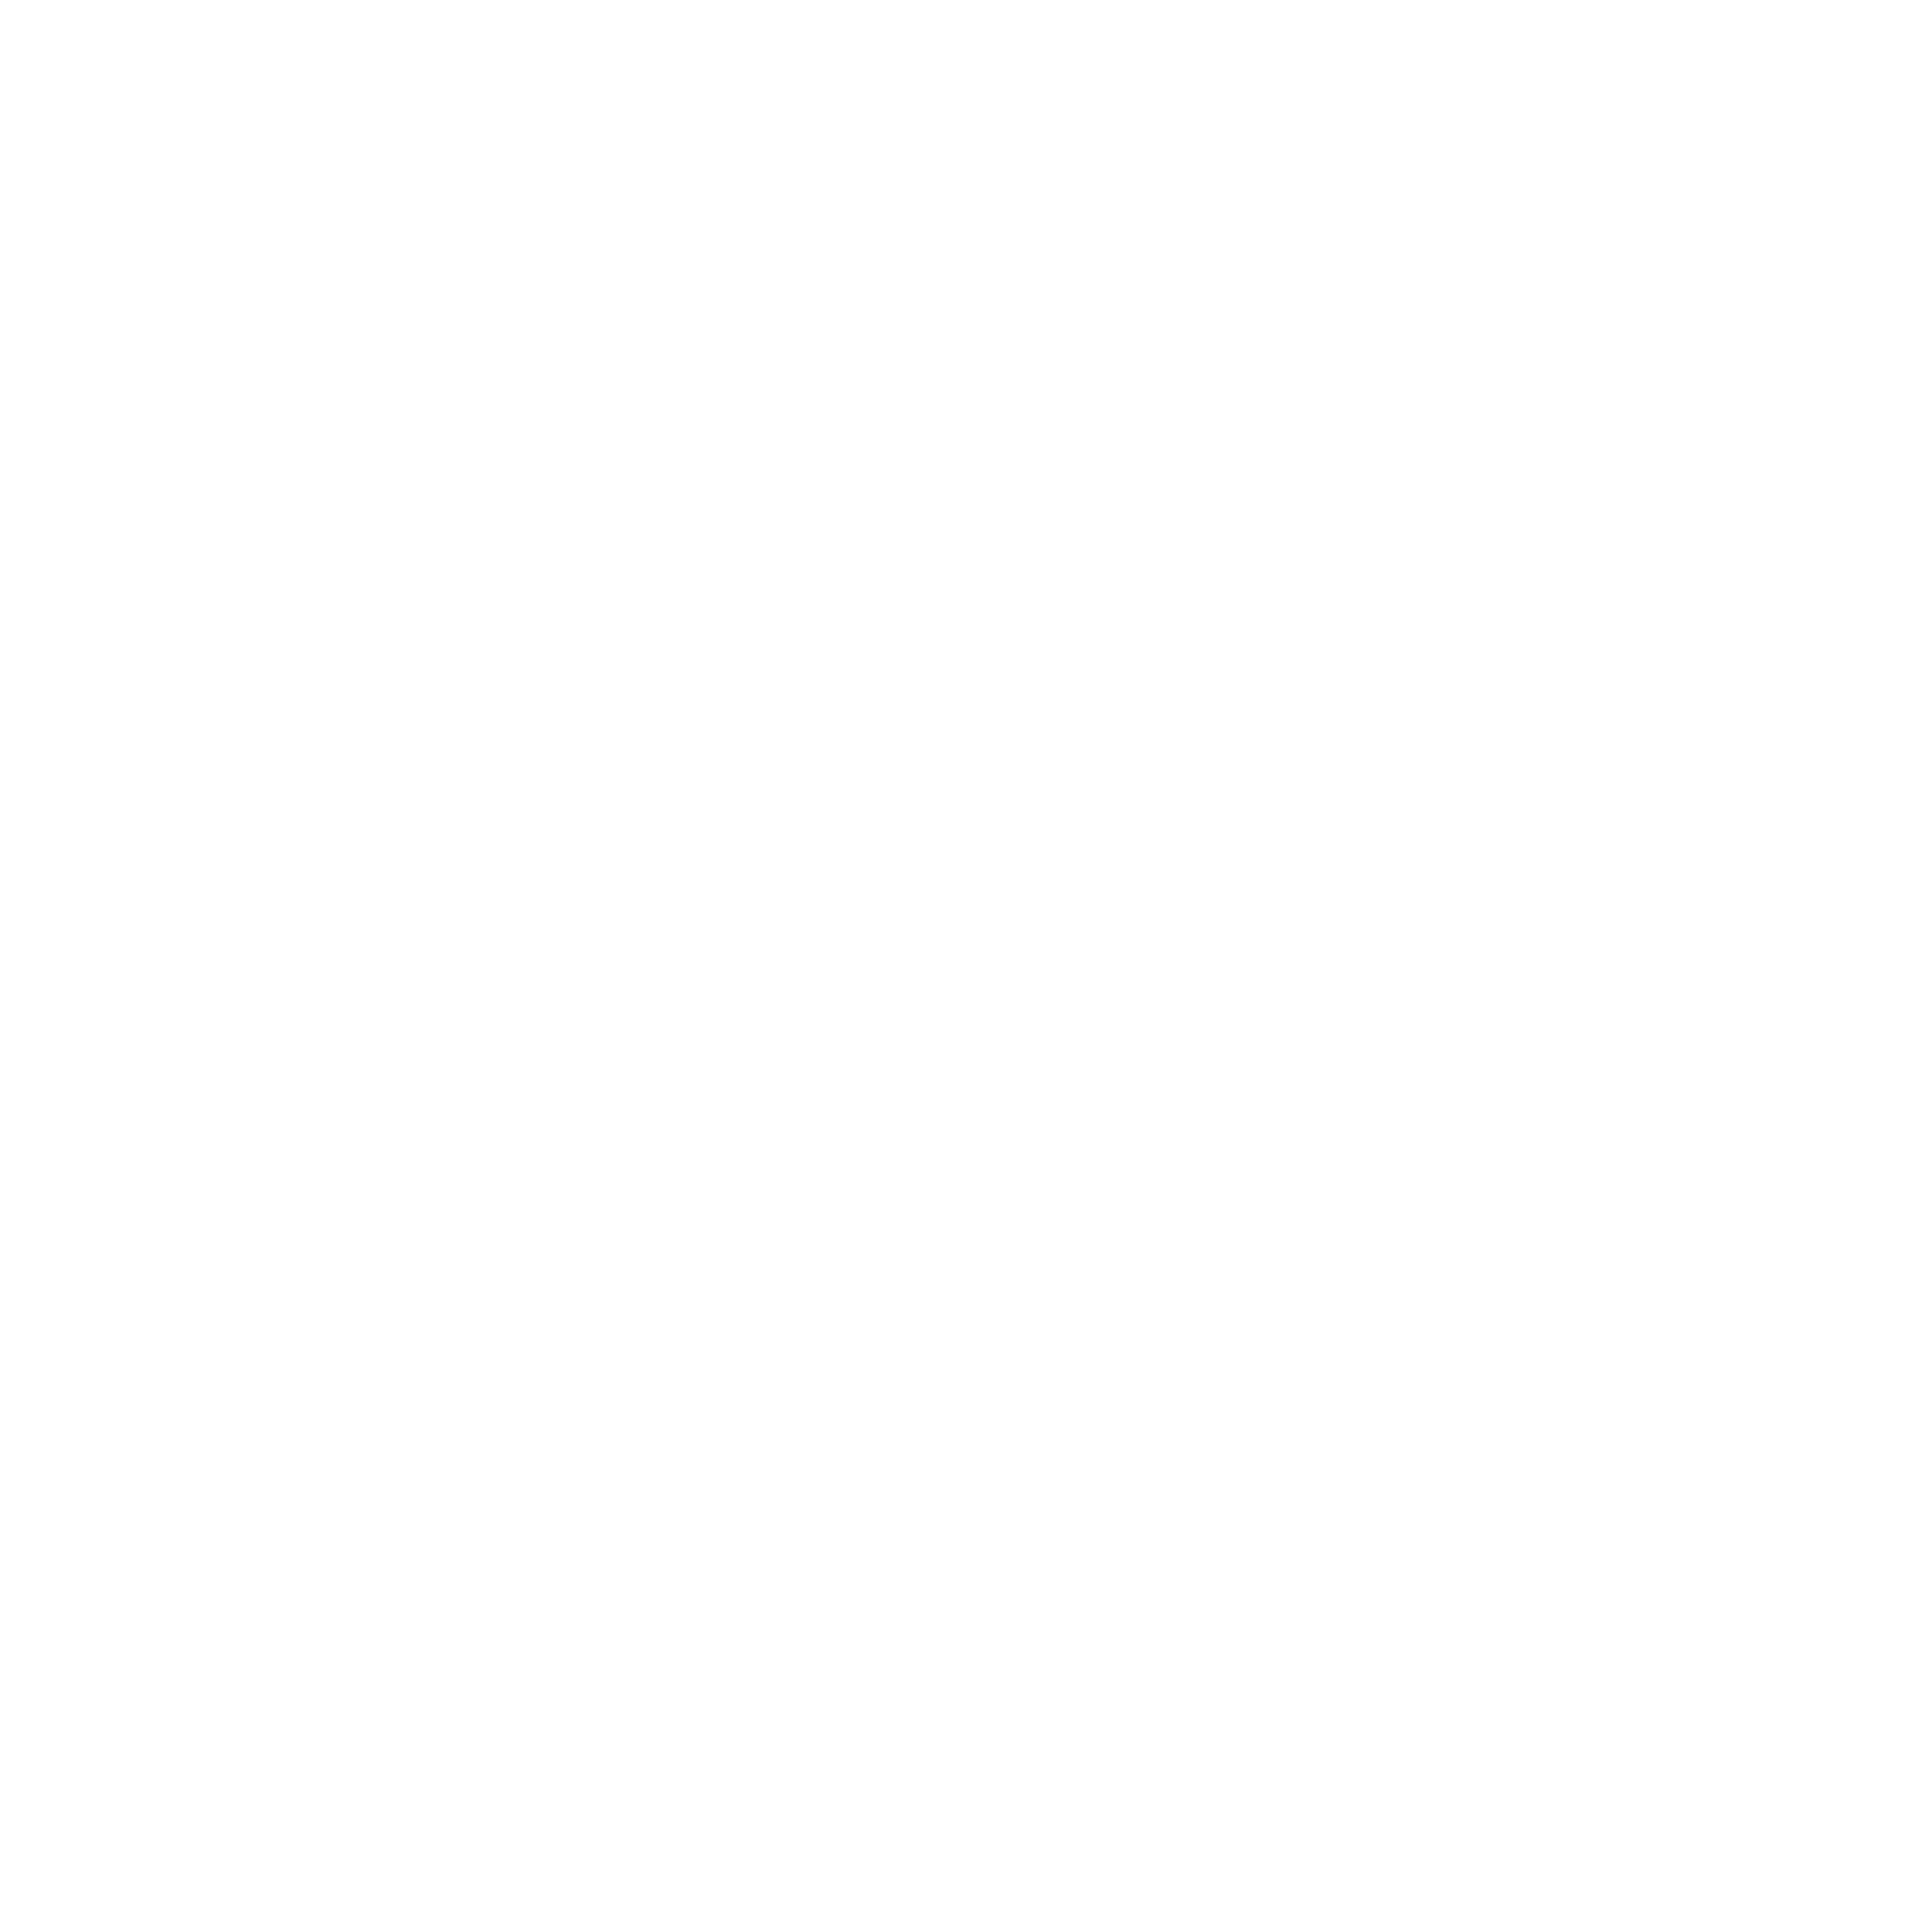 Rockit Barbershop - Melbourne CBD&#39;s Top-Rated Barbershop